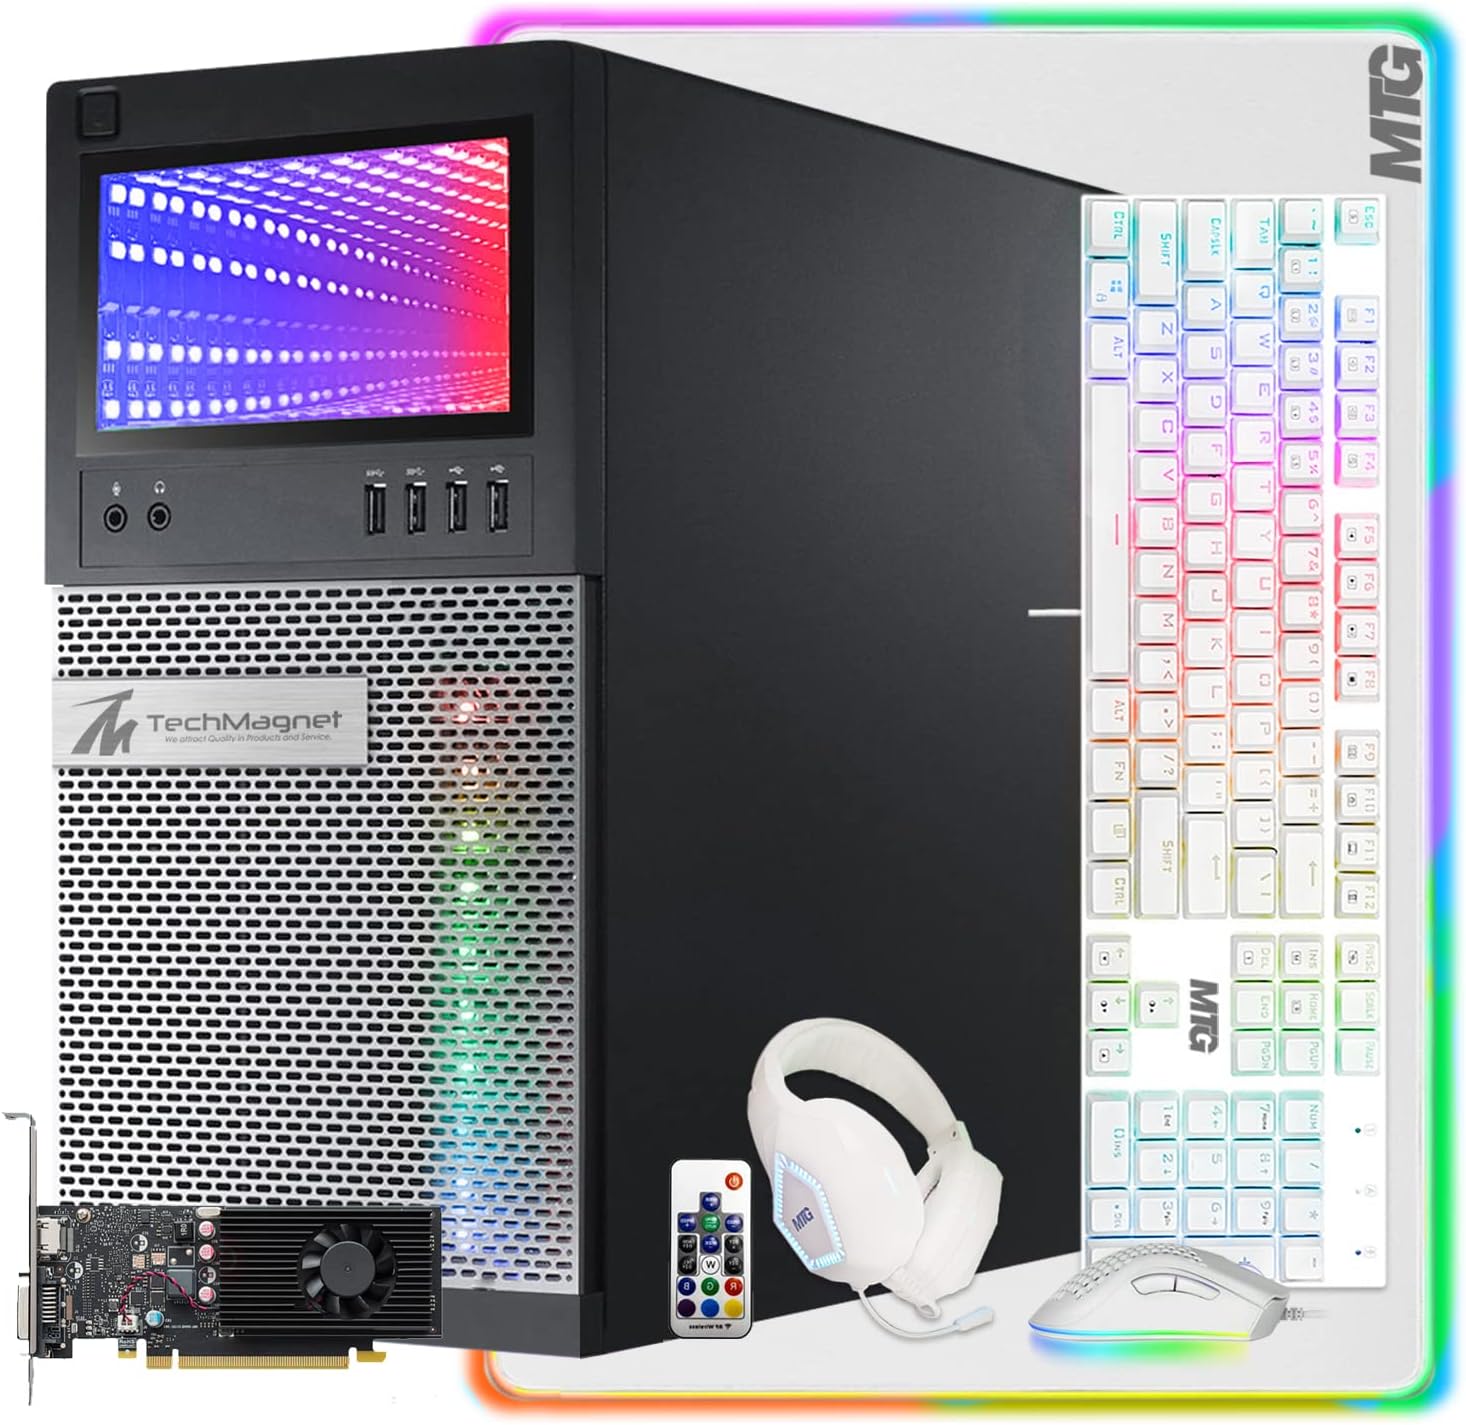 Gaming PC DesktopIntel core i7, TechMagnet Horizon with GT-730 4GB DDR5,  16GB RAM, 480GB SSD 2TB HDD, HDMI, DVI, VGA, Gaming Kit, Windows 10  Professional (Renewed)